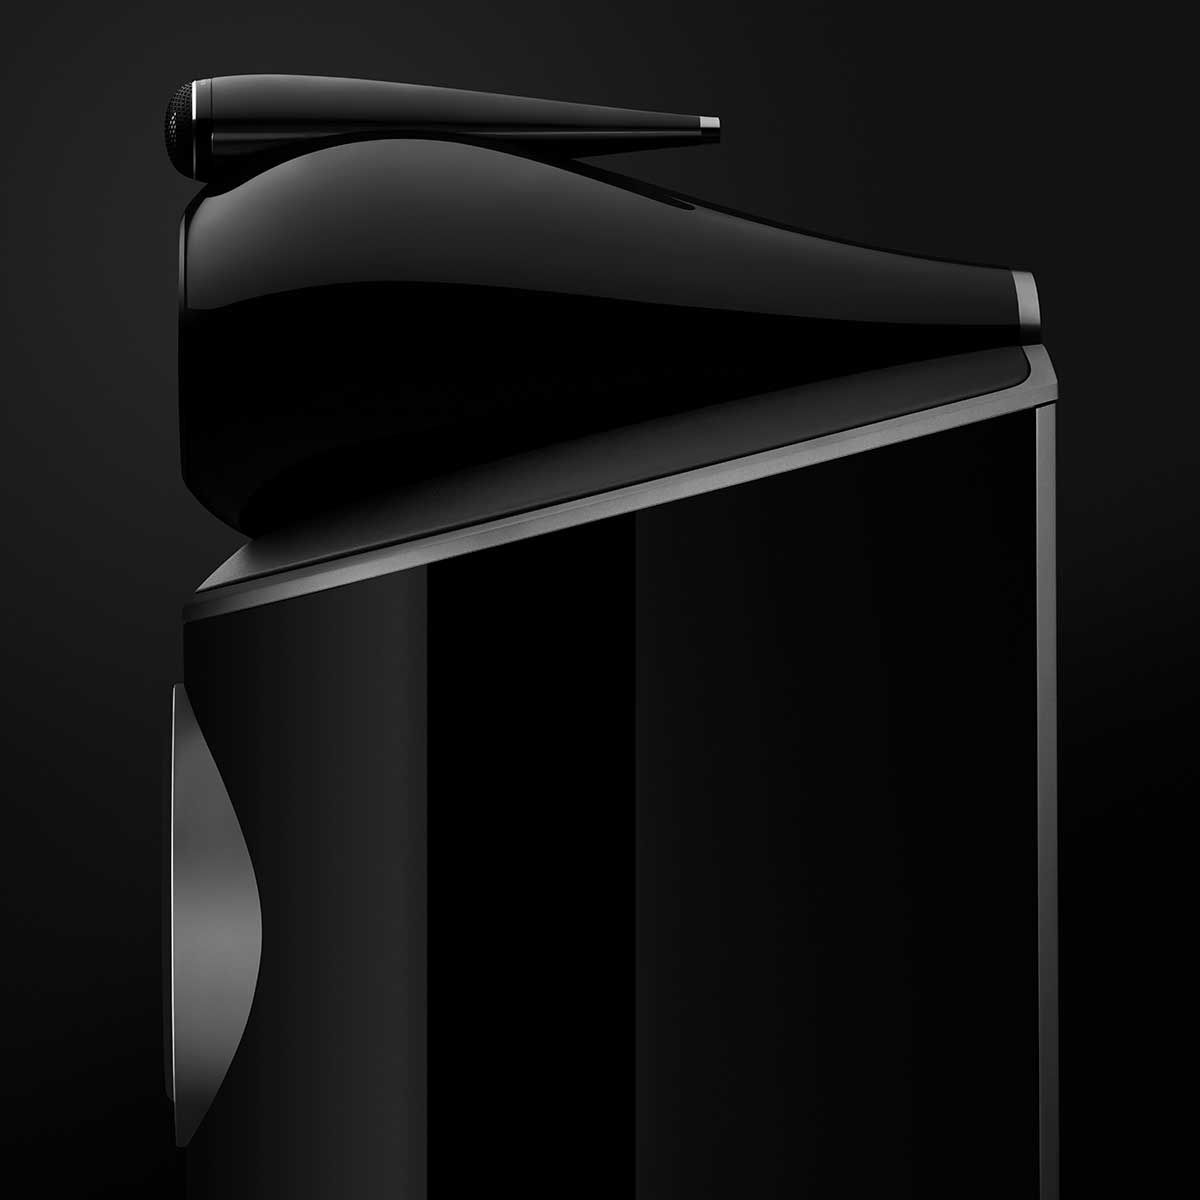 Bowers & Wilkins 801 D4 Floorstanding Speaker, Satin Black, side beauty shot